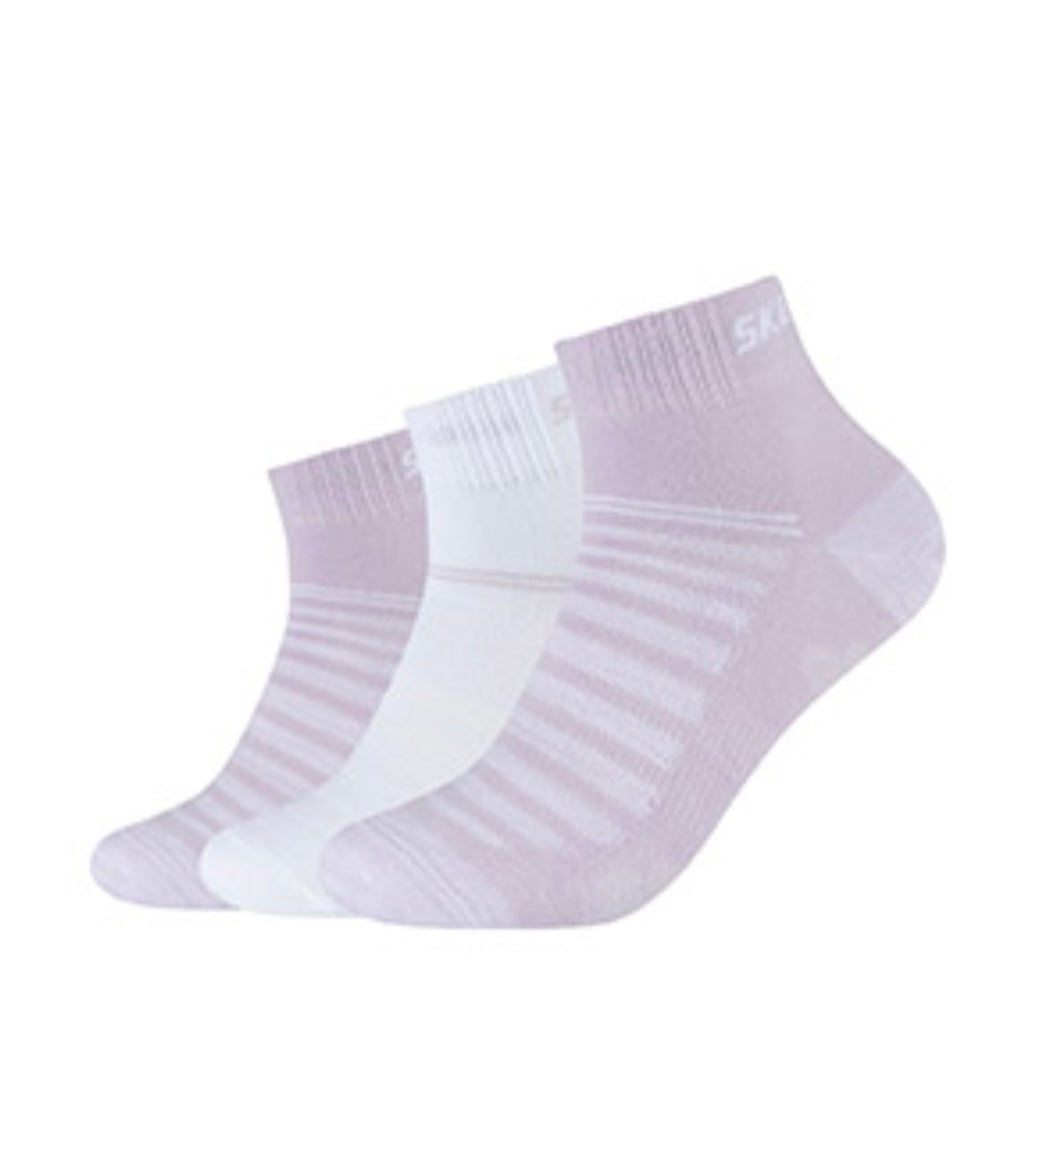 Skechers Basic Quarter Fashion - Mesh Ventilation socks - Pastel Lila 3 Pack